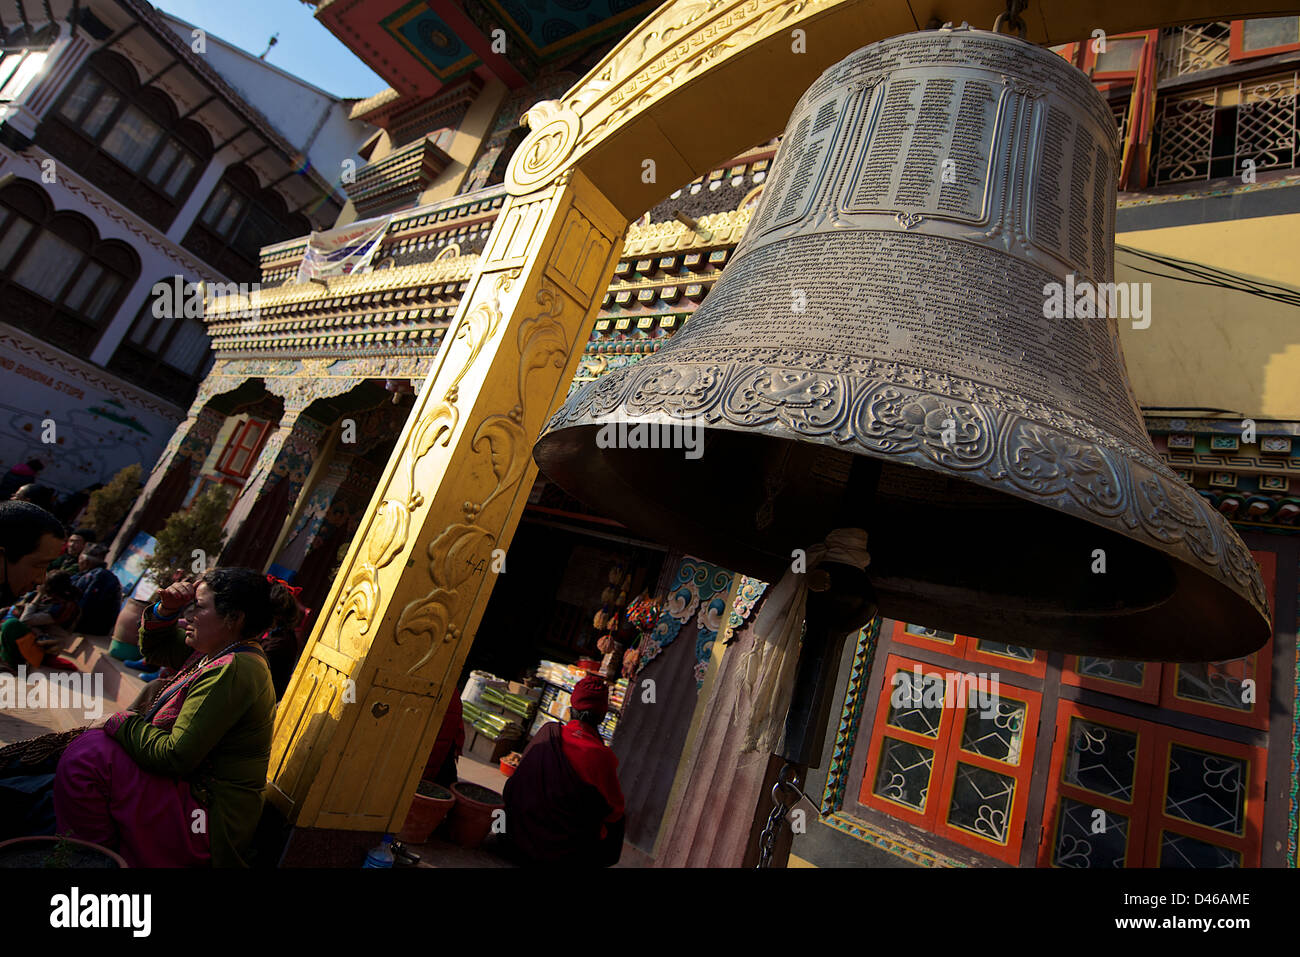 Tibetan prayer bell hi-res stock photography and images - Alamy